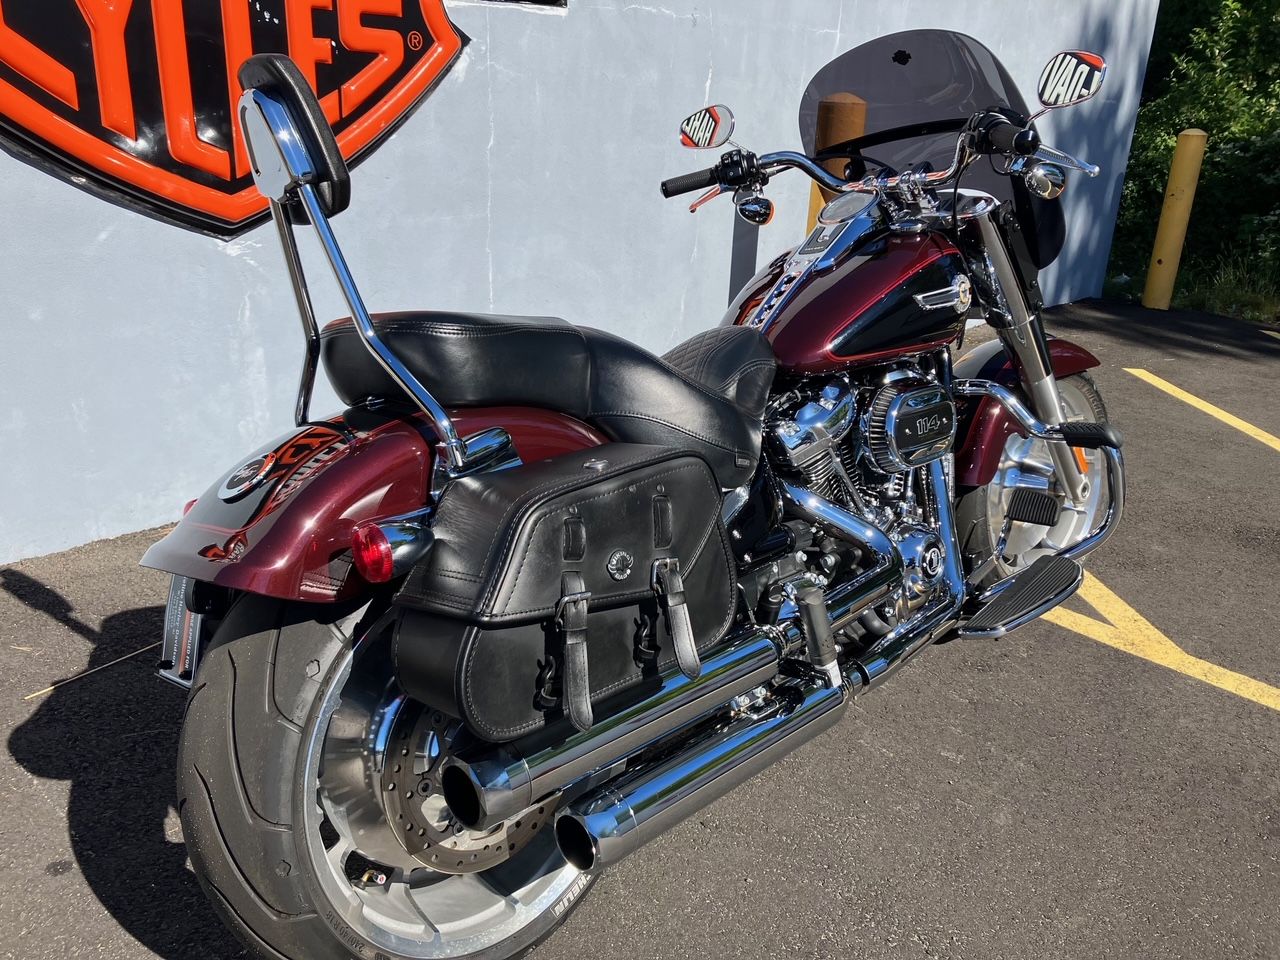 2022 Harley-Davidson Fat Boy® 114 in West Long Branch, New Jersey - Photo 2